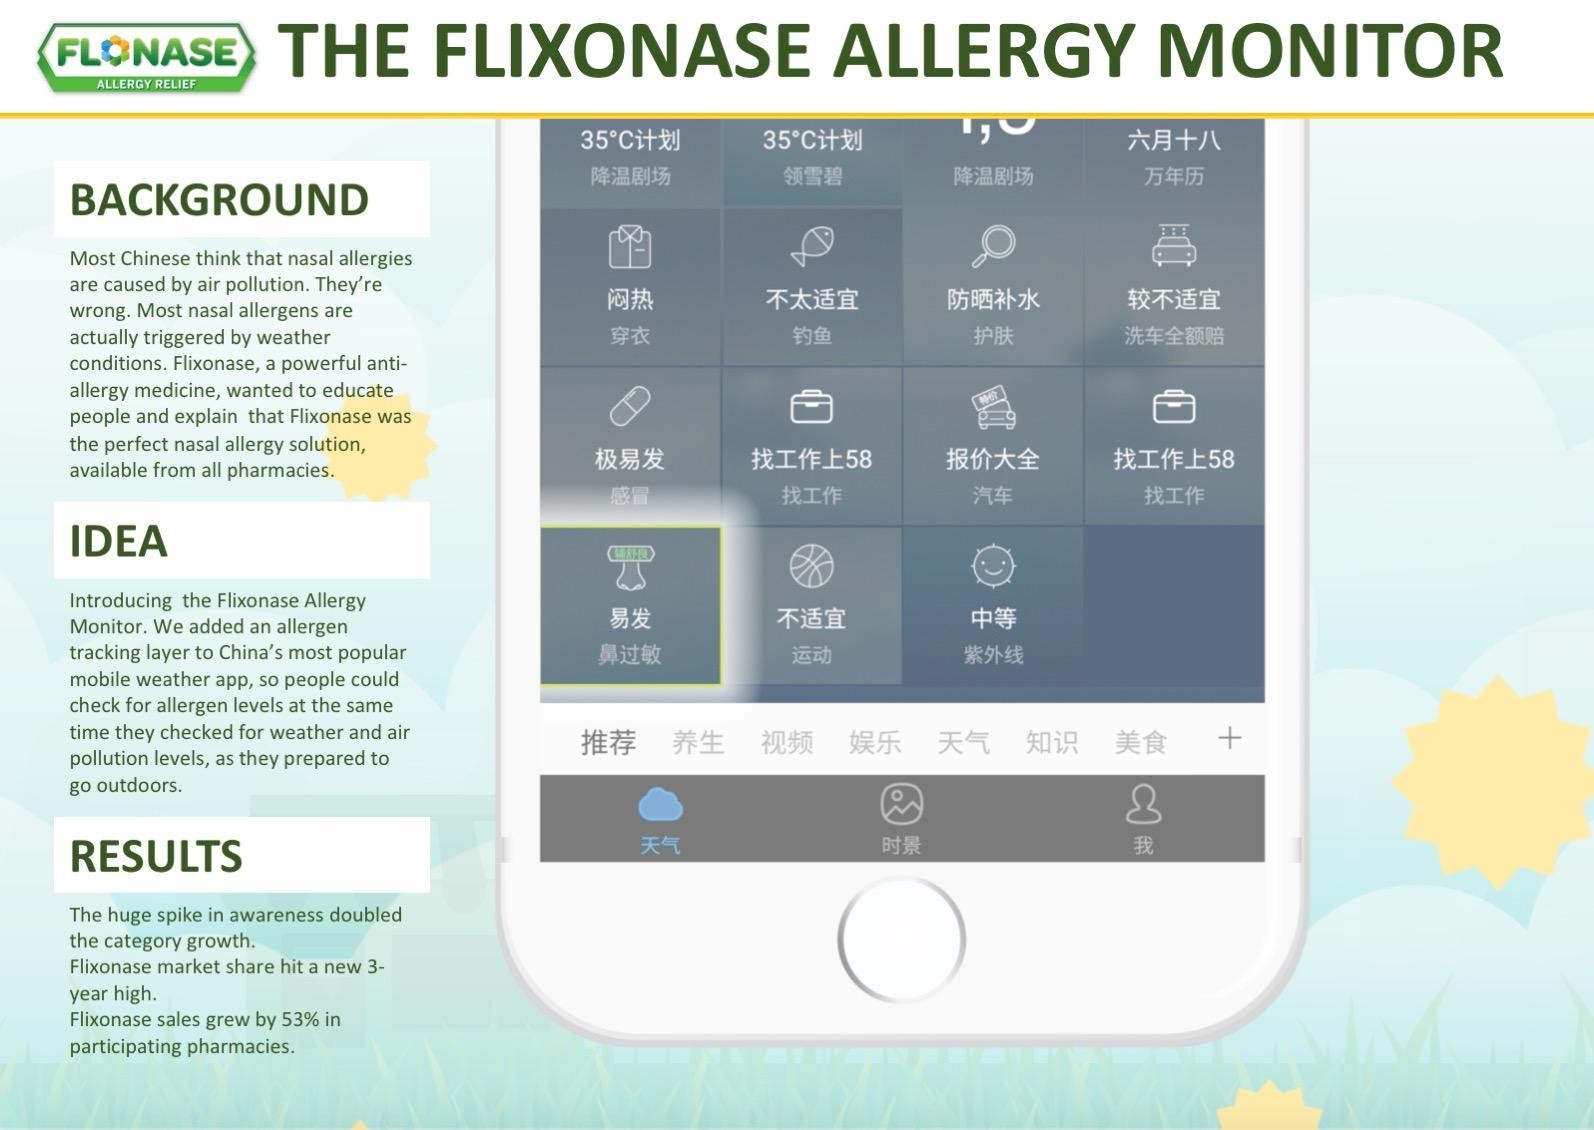 The Flixonase Allergy Monitor